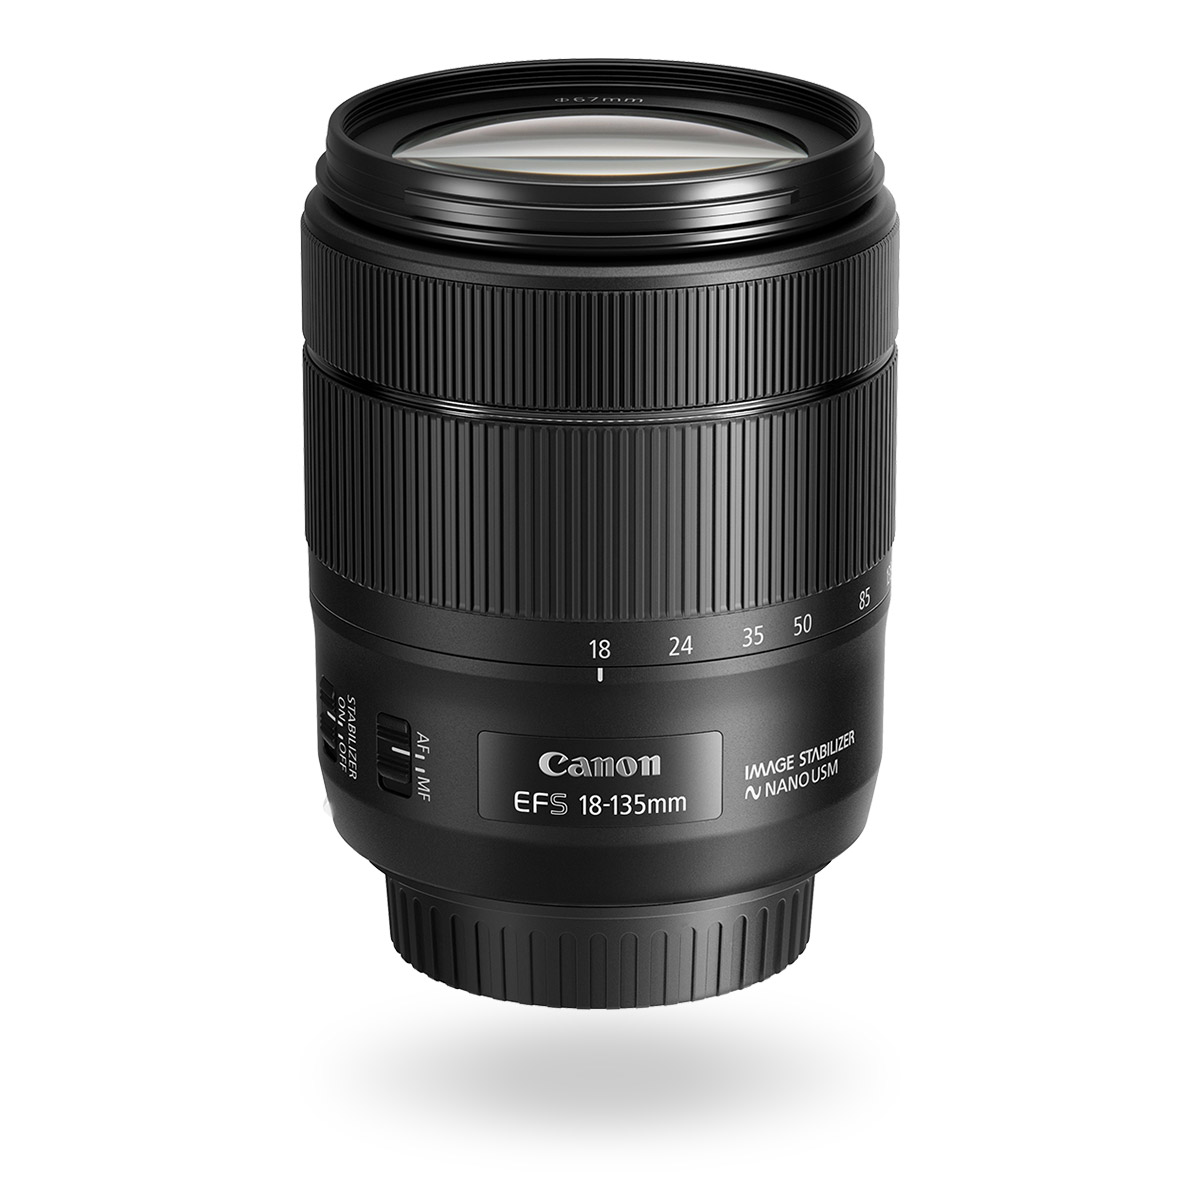 EF-S 18-135mm f3.5-5.6 IS USM Lens | Canon Australia